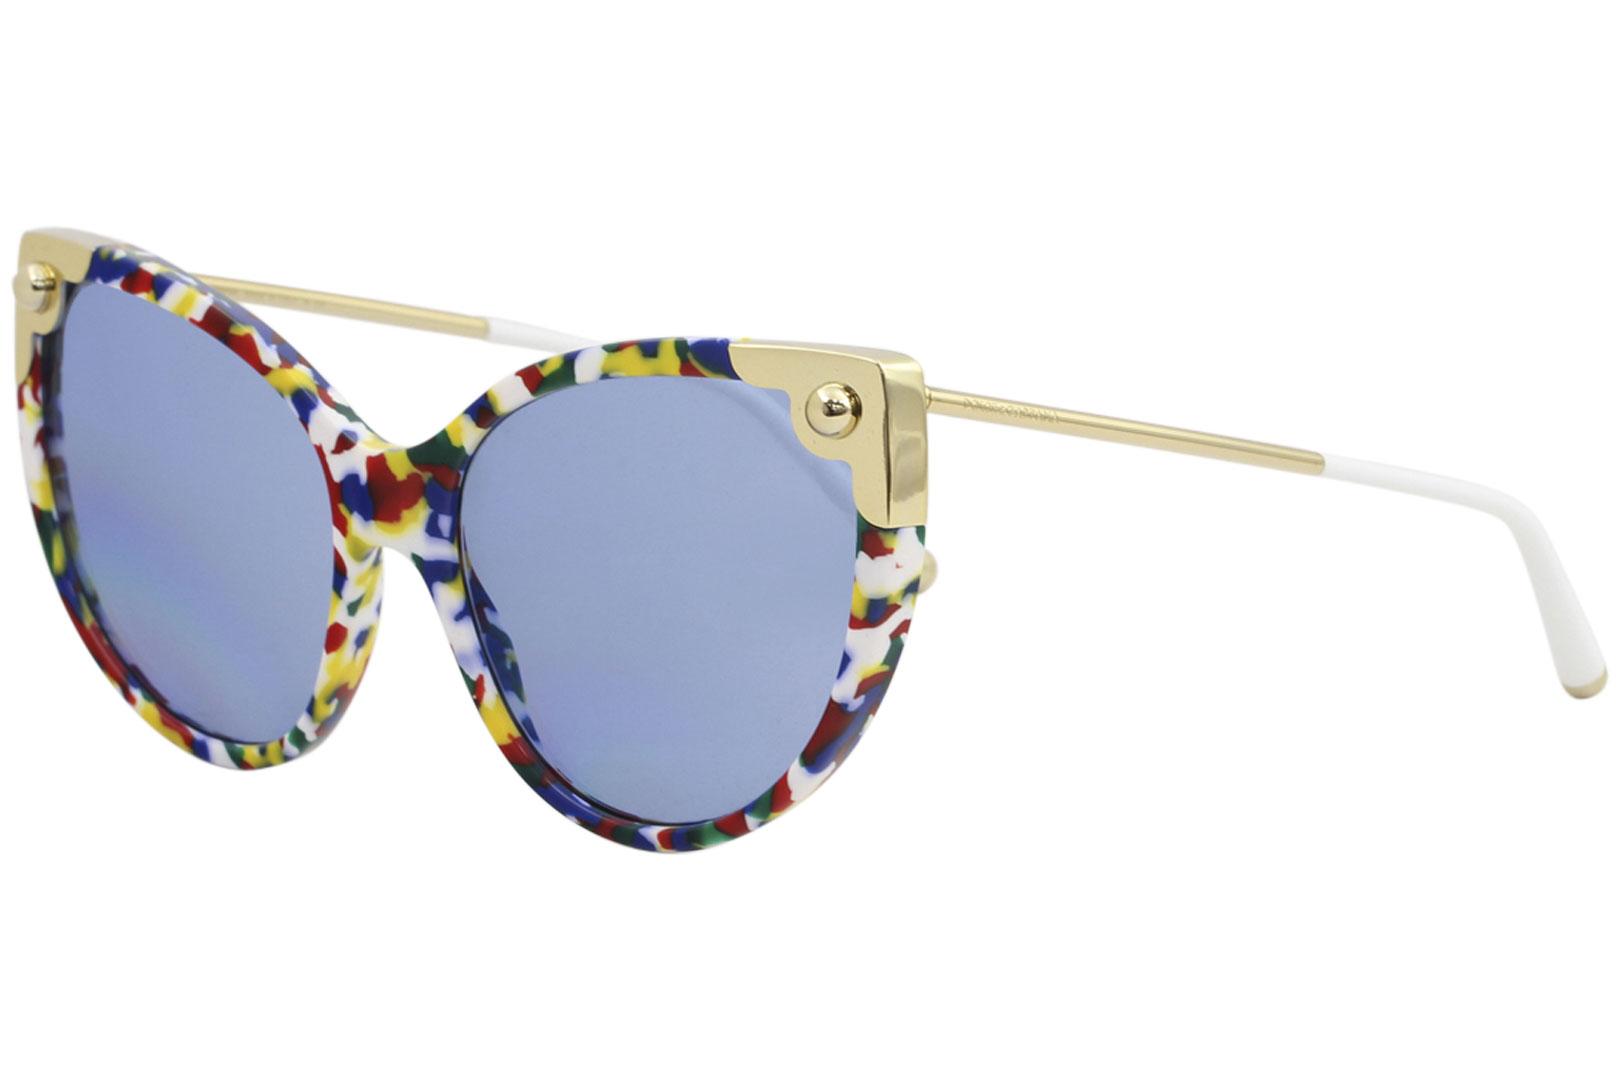 Dolce & Gabbana Women's D&G DG4337 DG/4337 Fashion Cat Eye Sunglasses - Multicolor Gold/Light Blue   3181/72 - Lens 60 Bridge 18 B 53.4 ED 70.8 Temple 140mm